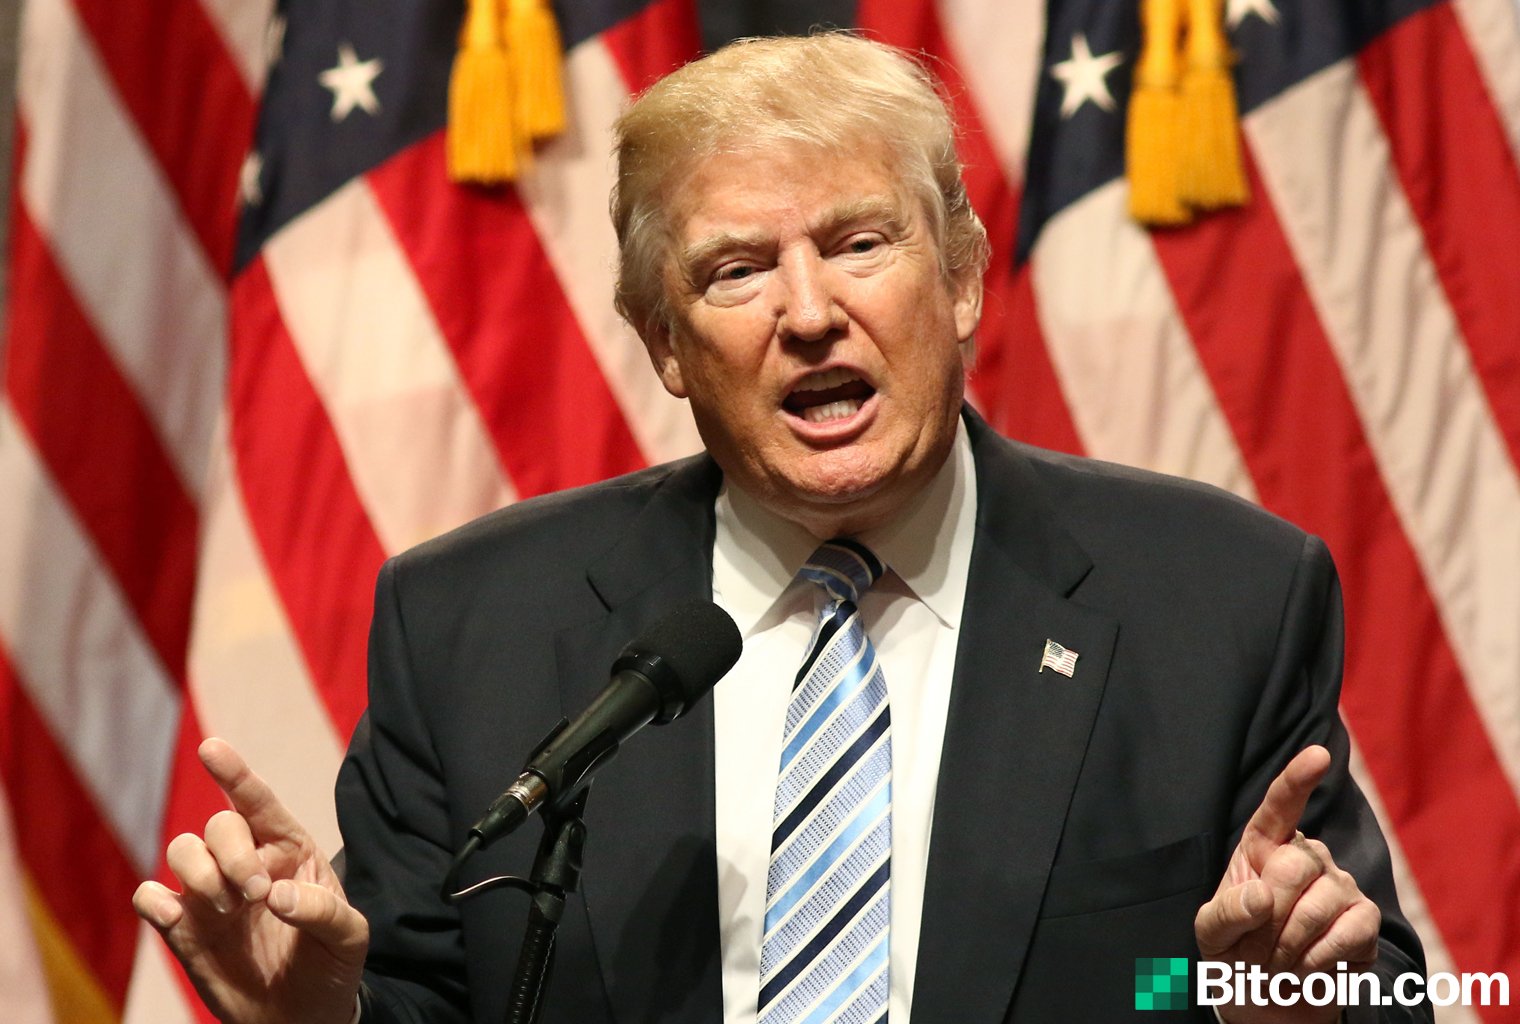 Can't Lock Down Bitcoin: Trump Ponders Halting Stock Trading, Grounding US Passenger Flights